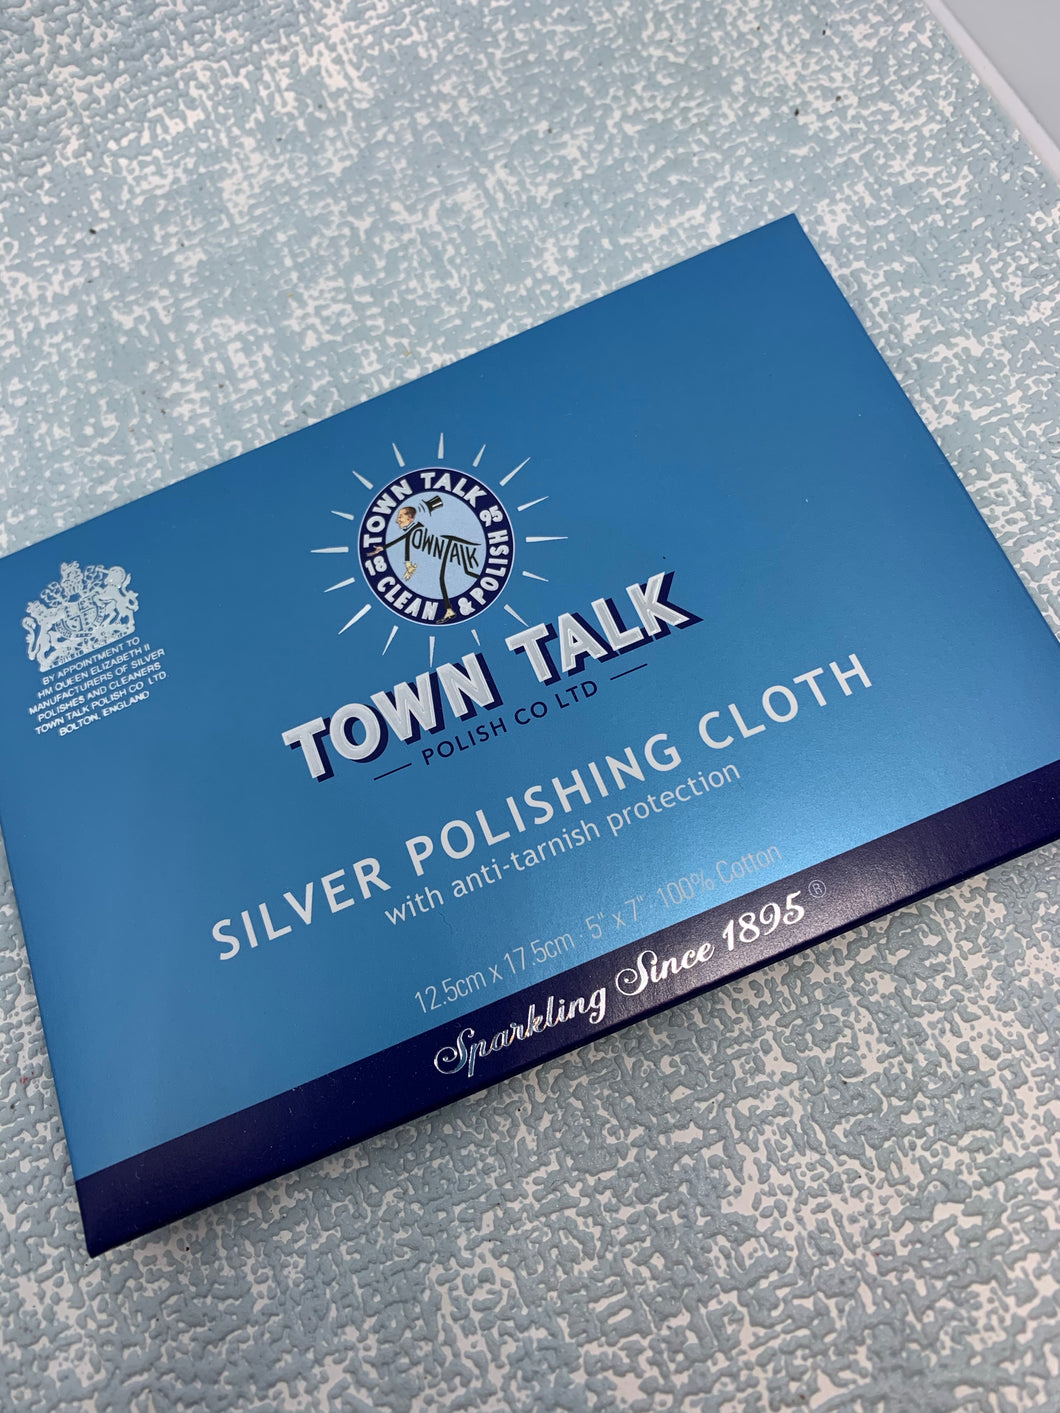 Town talk silver polishing cloth